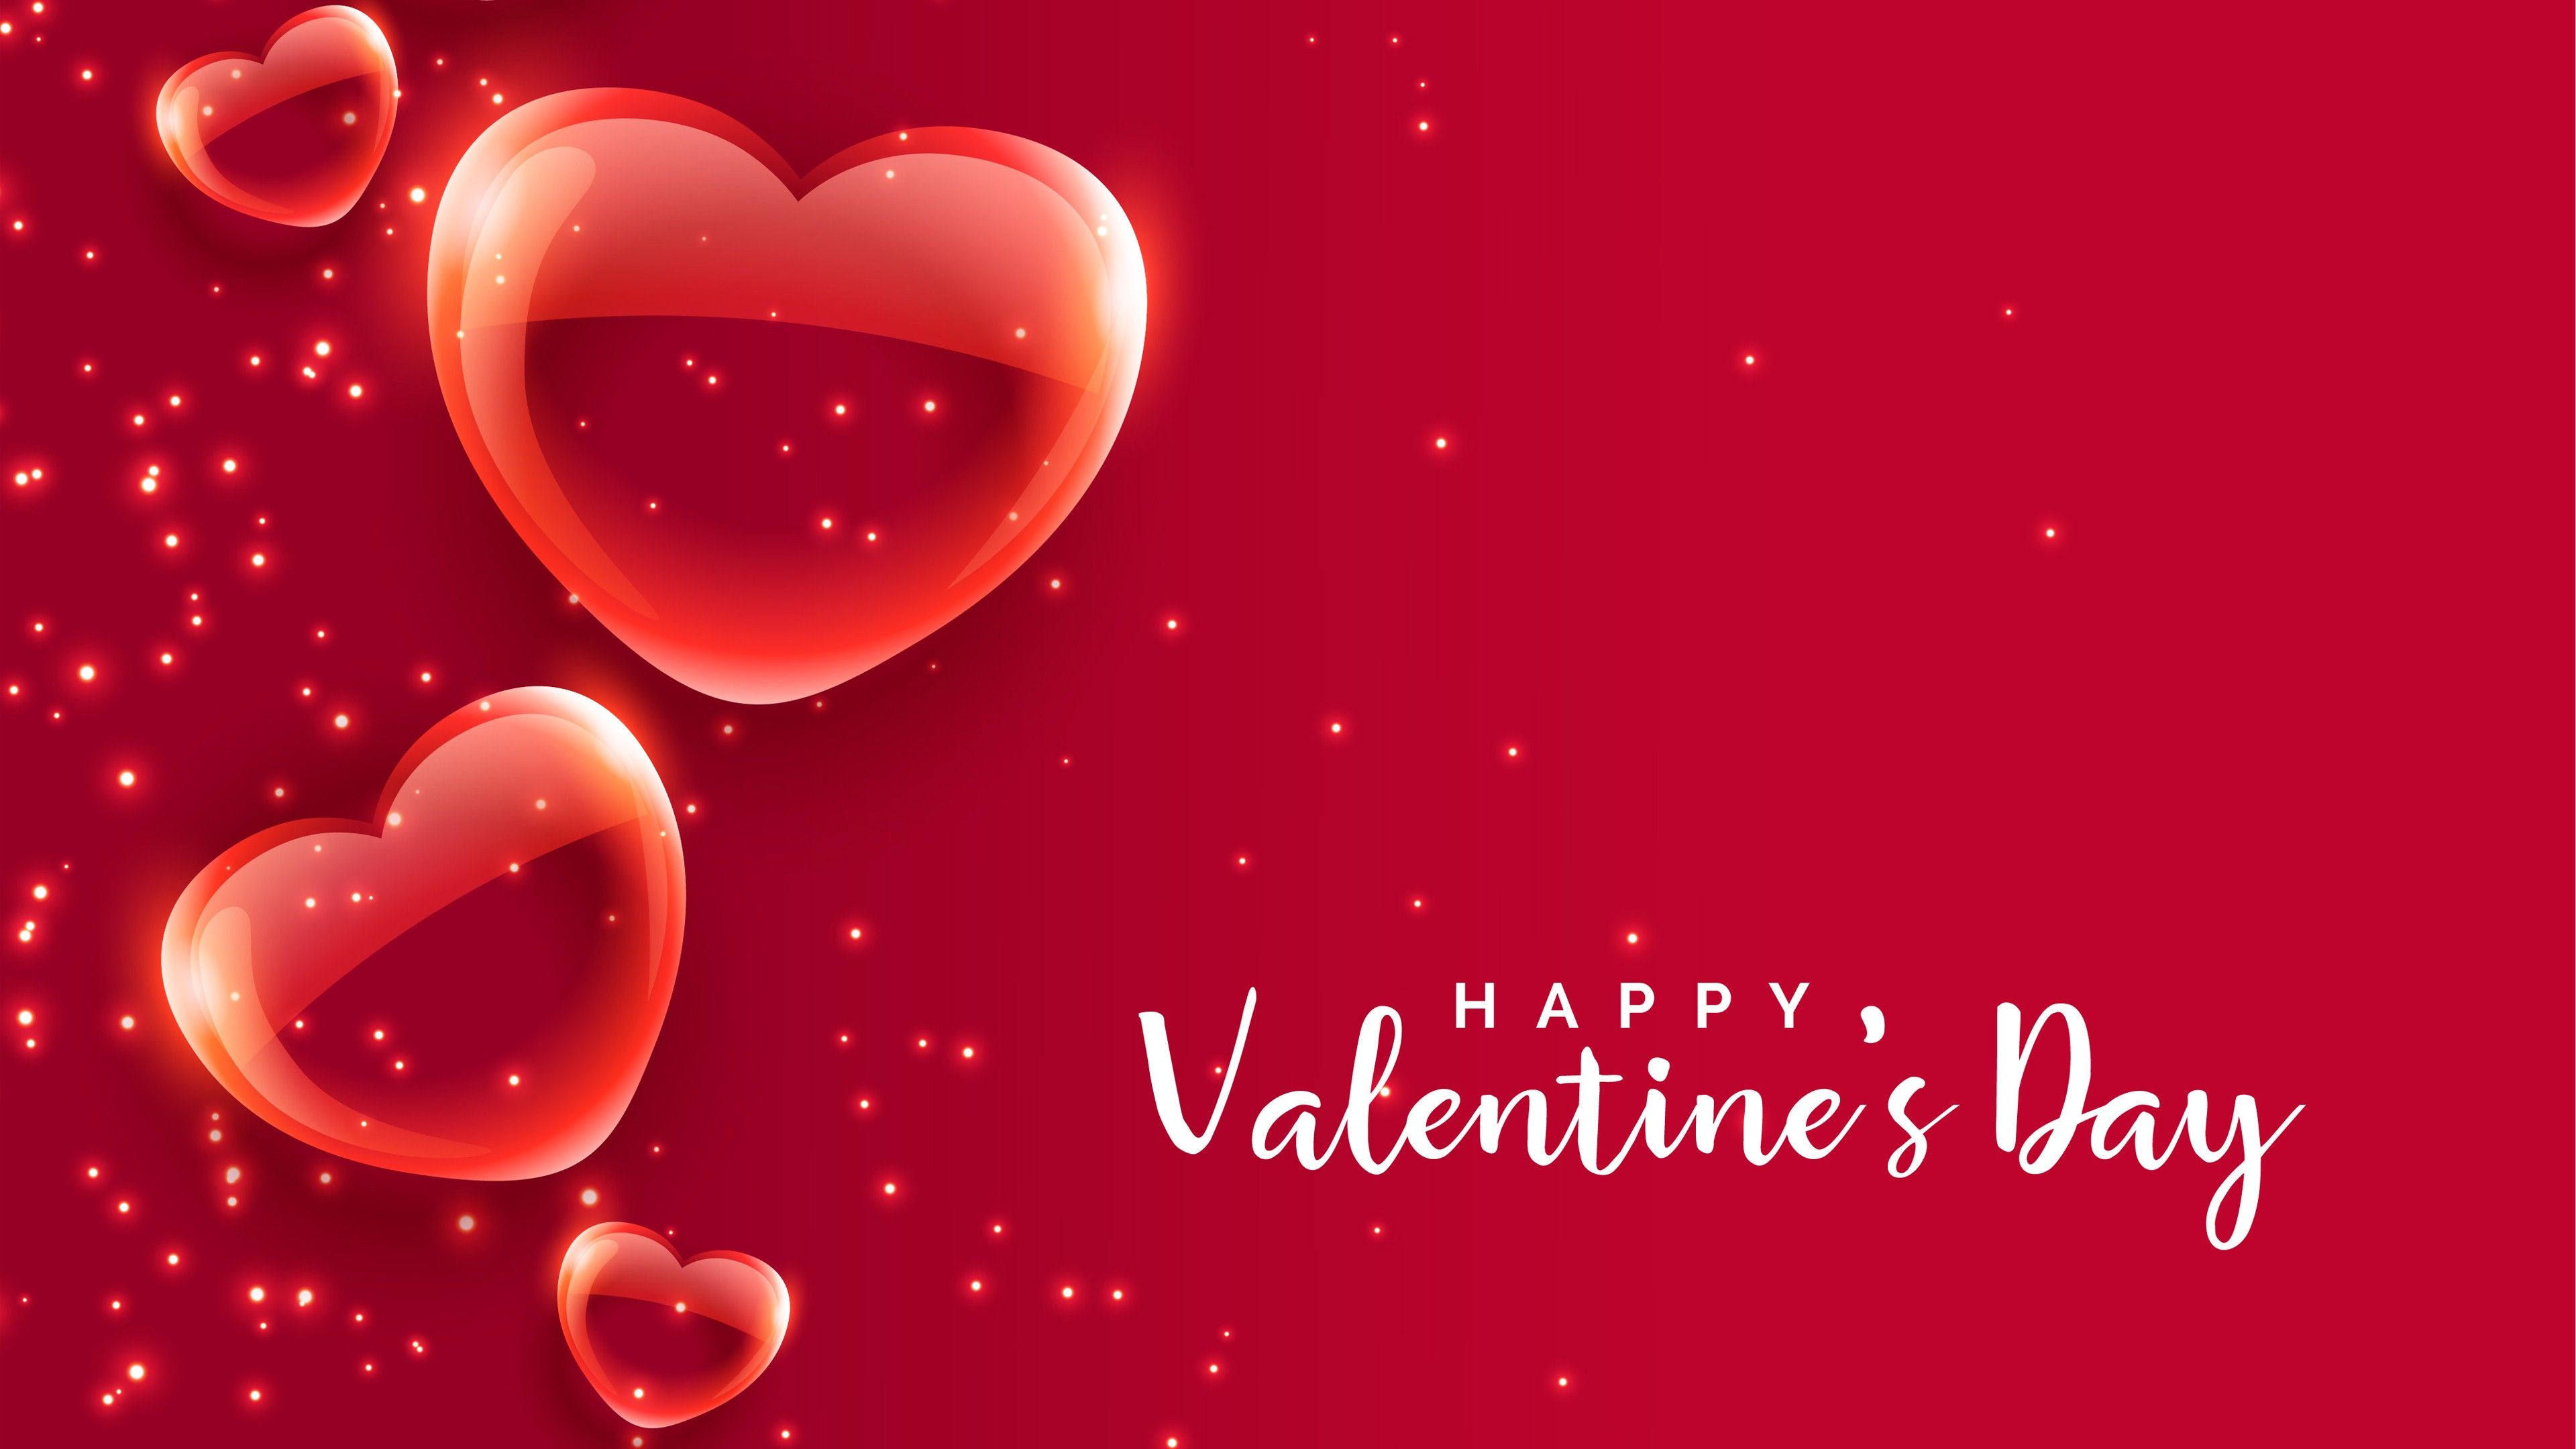 Happy Valentines Day Festival of Love .hdnicewallpaper.com